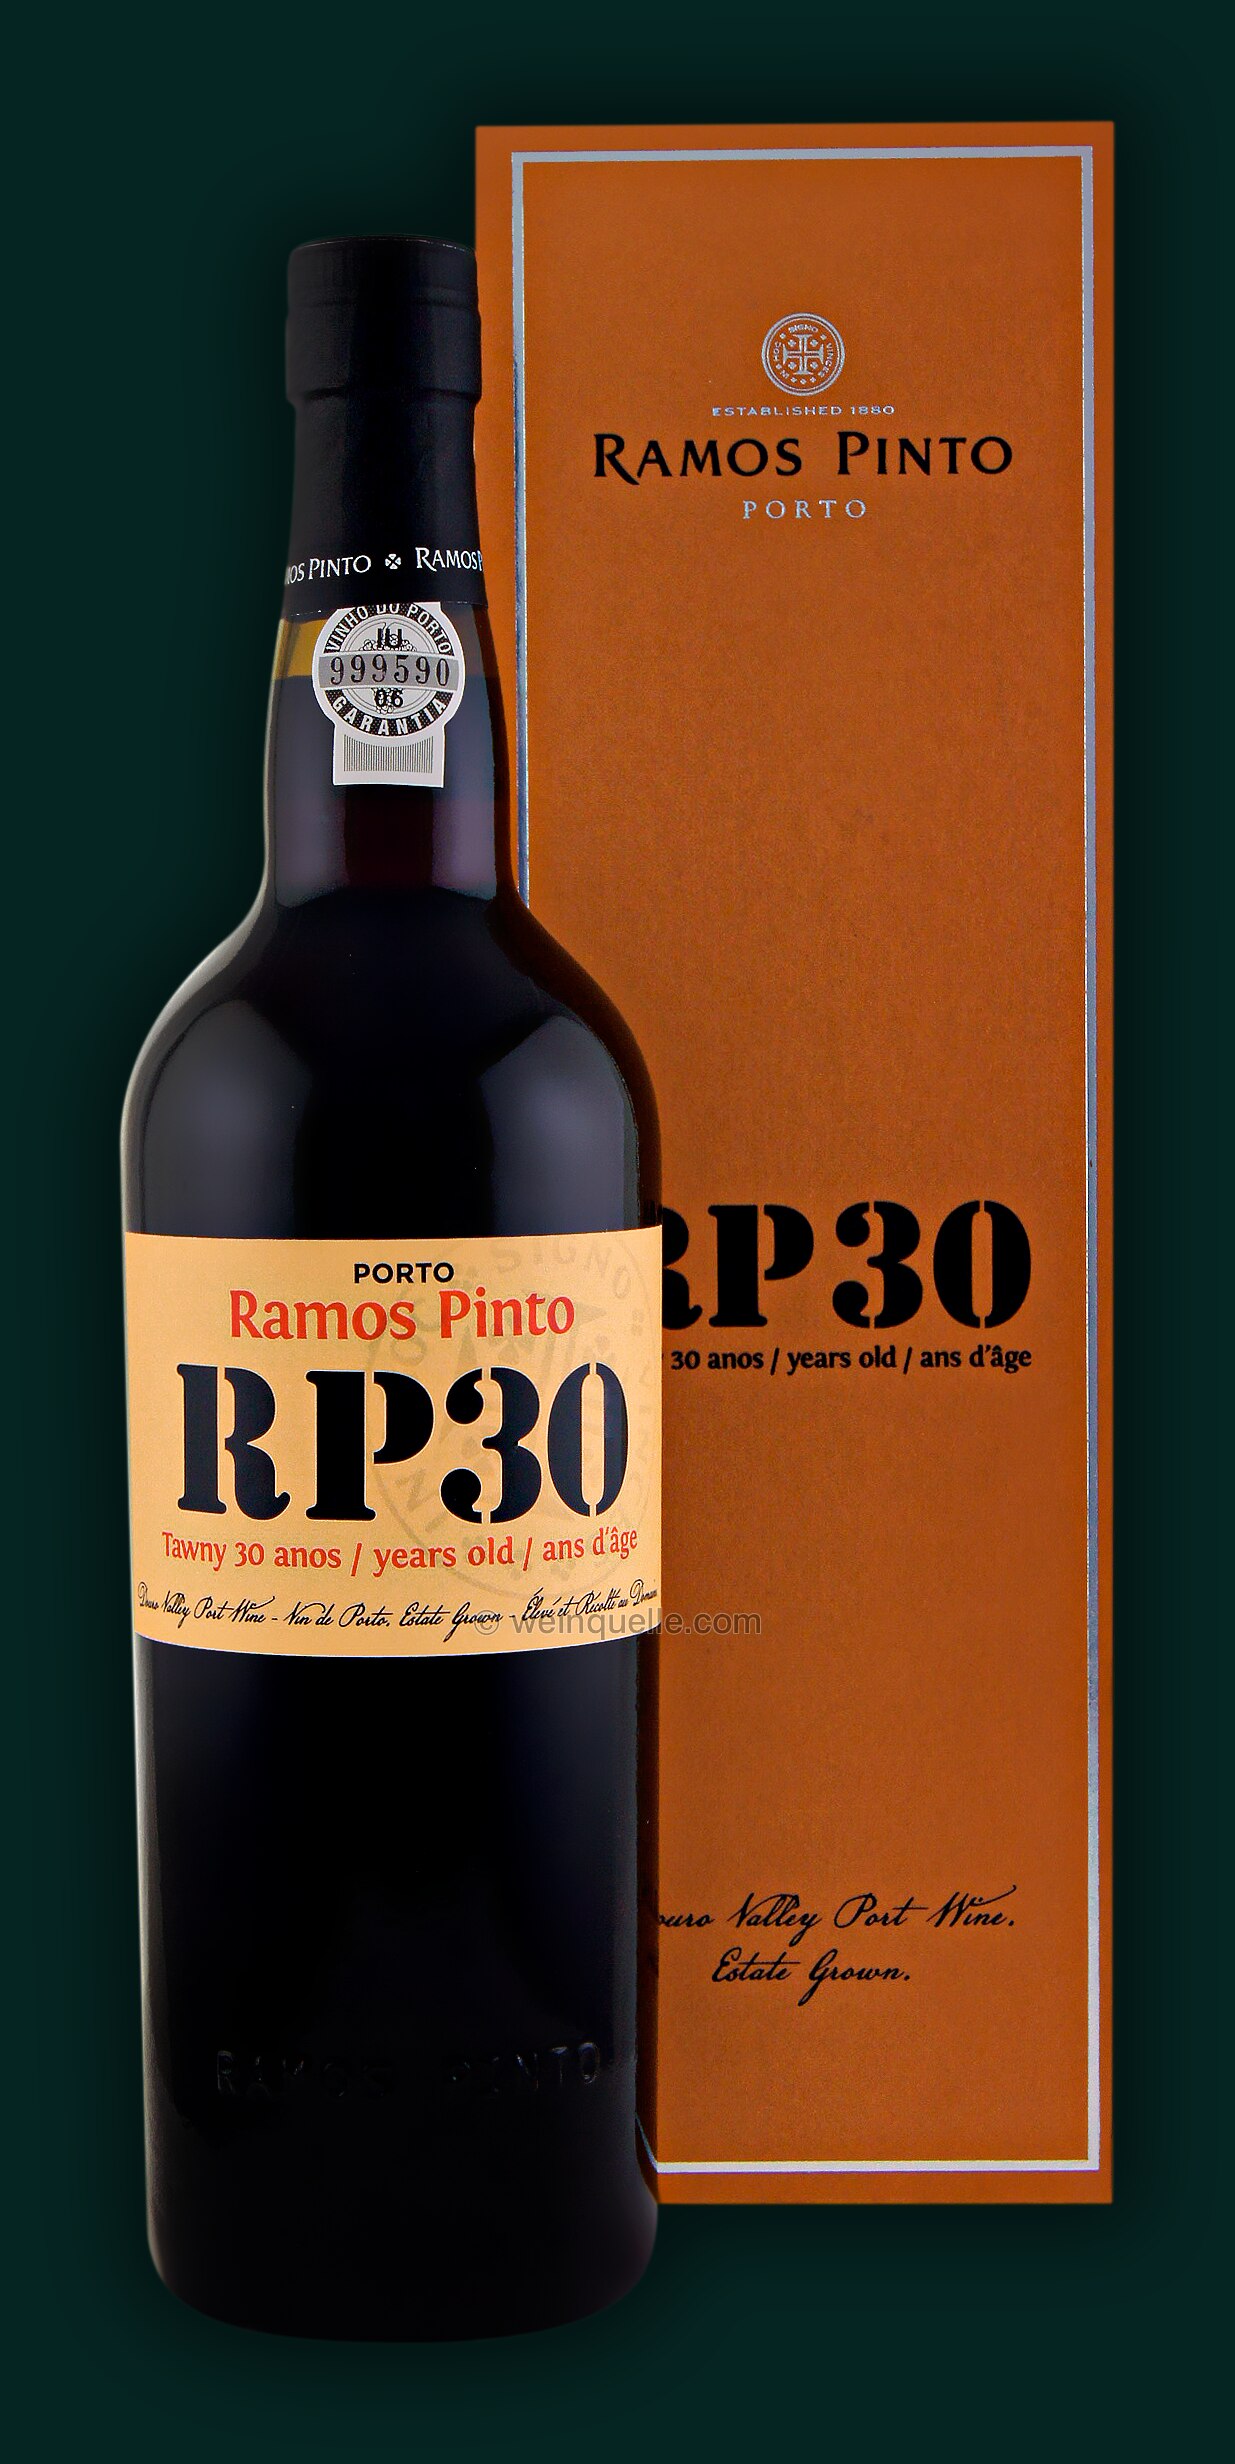 Ramos Tawny € 30 RP30 115,00 Port, Weinquelle - Years Pinto Lühmann